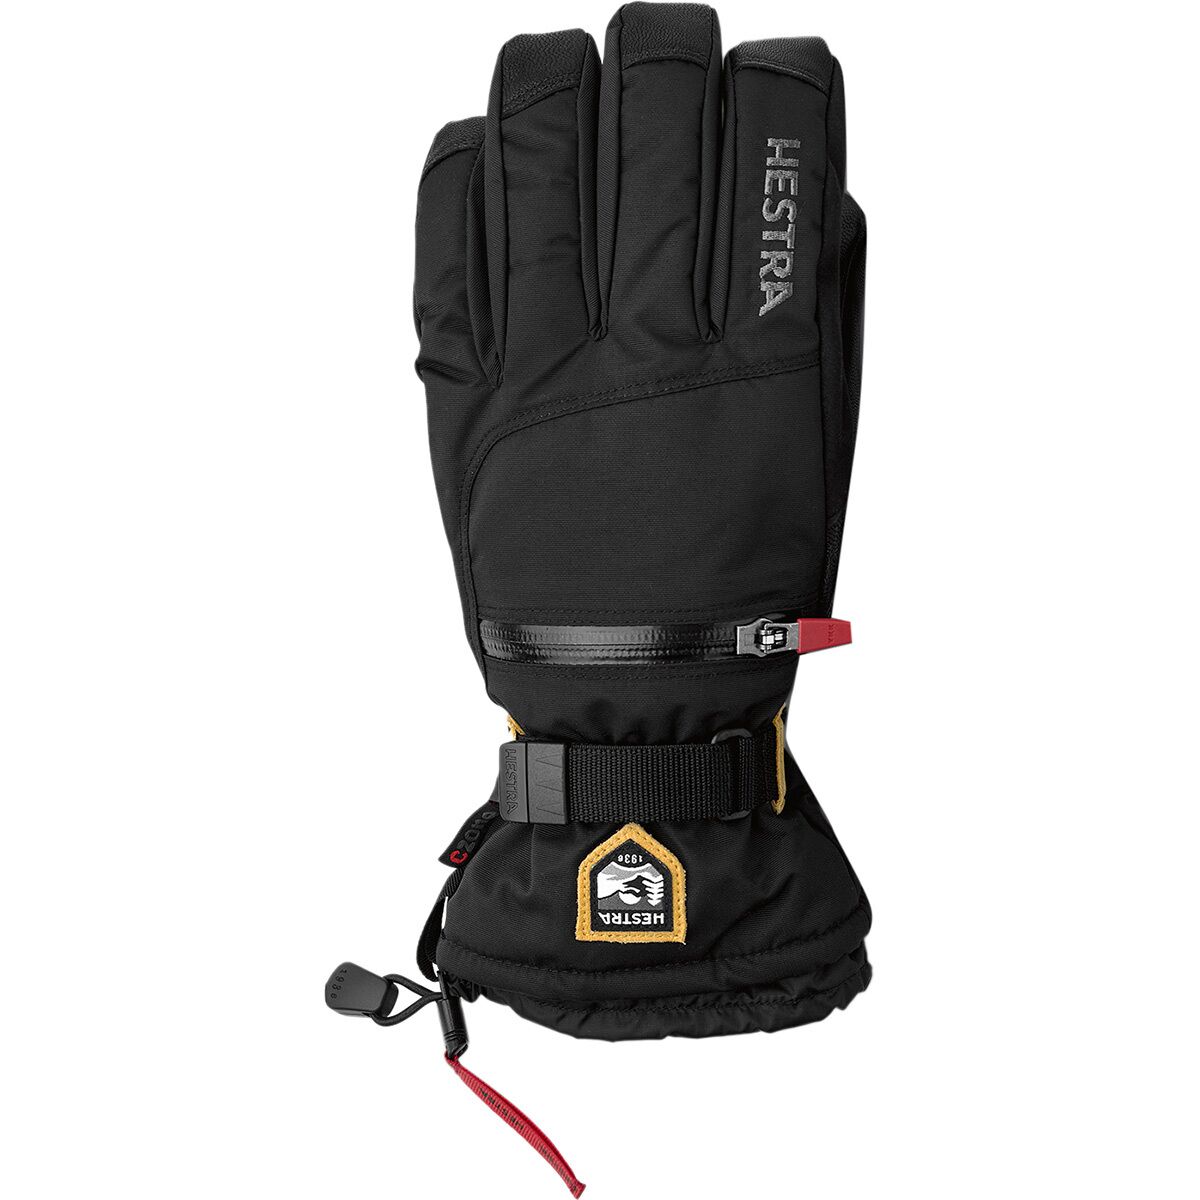 Hestra All Mountain CZone Glove - Men's